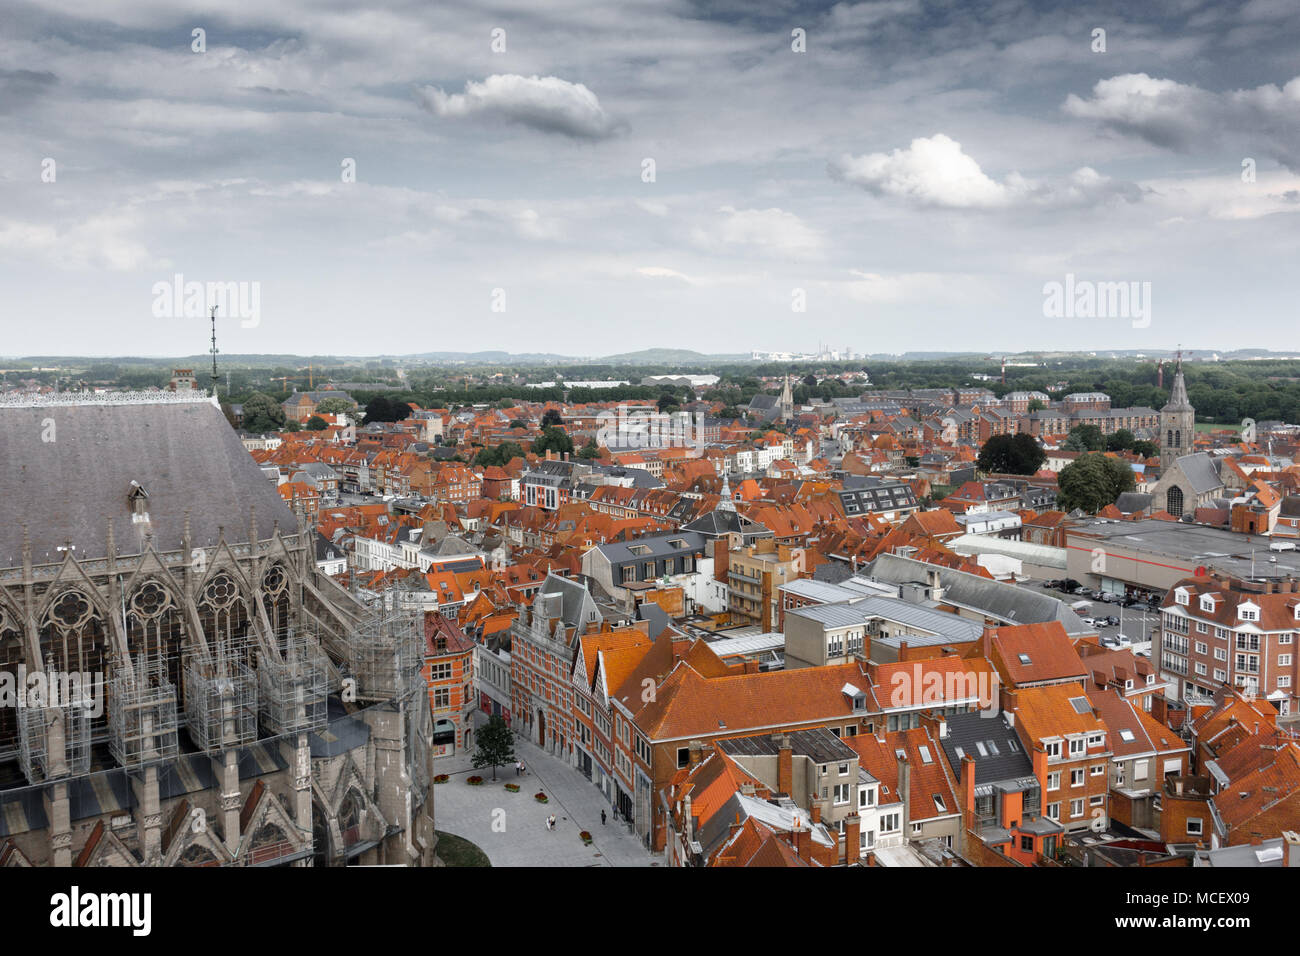 Church and city buildings in Tournai, Belgium Stock Photo